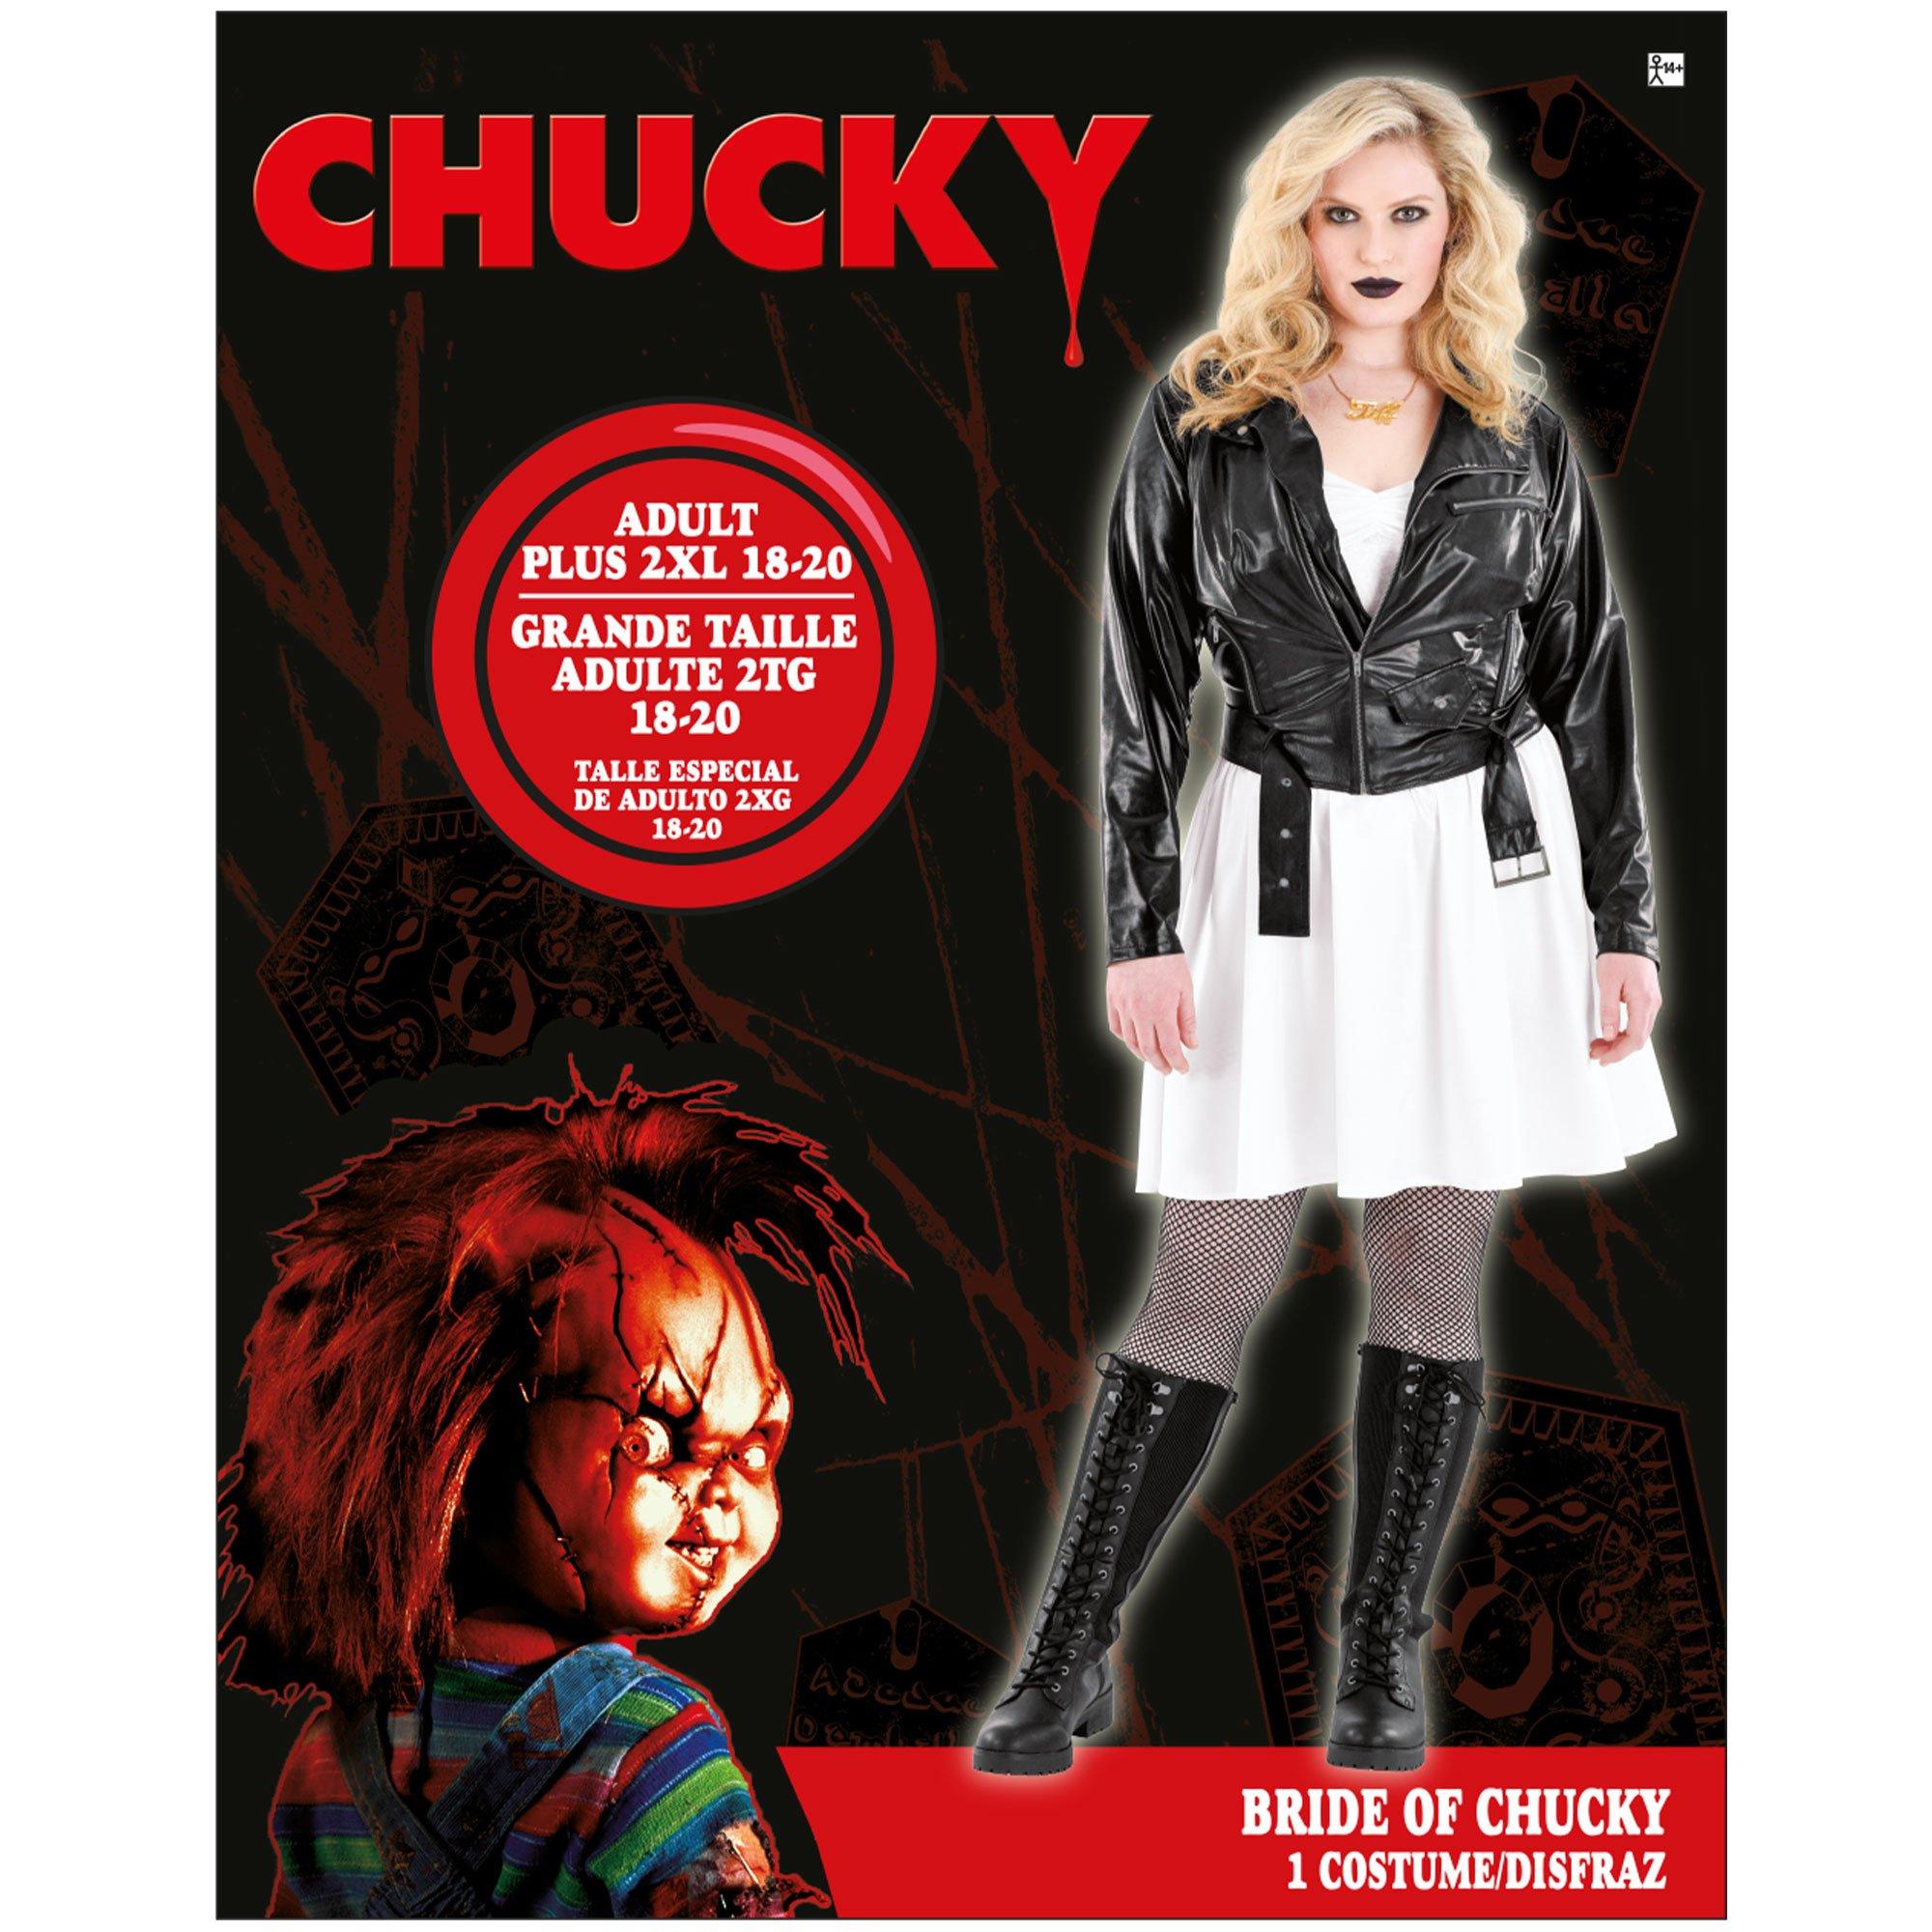 Bride of Chucky Costume - Bride of Chucky Cosplay